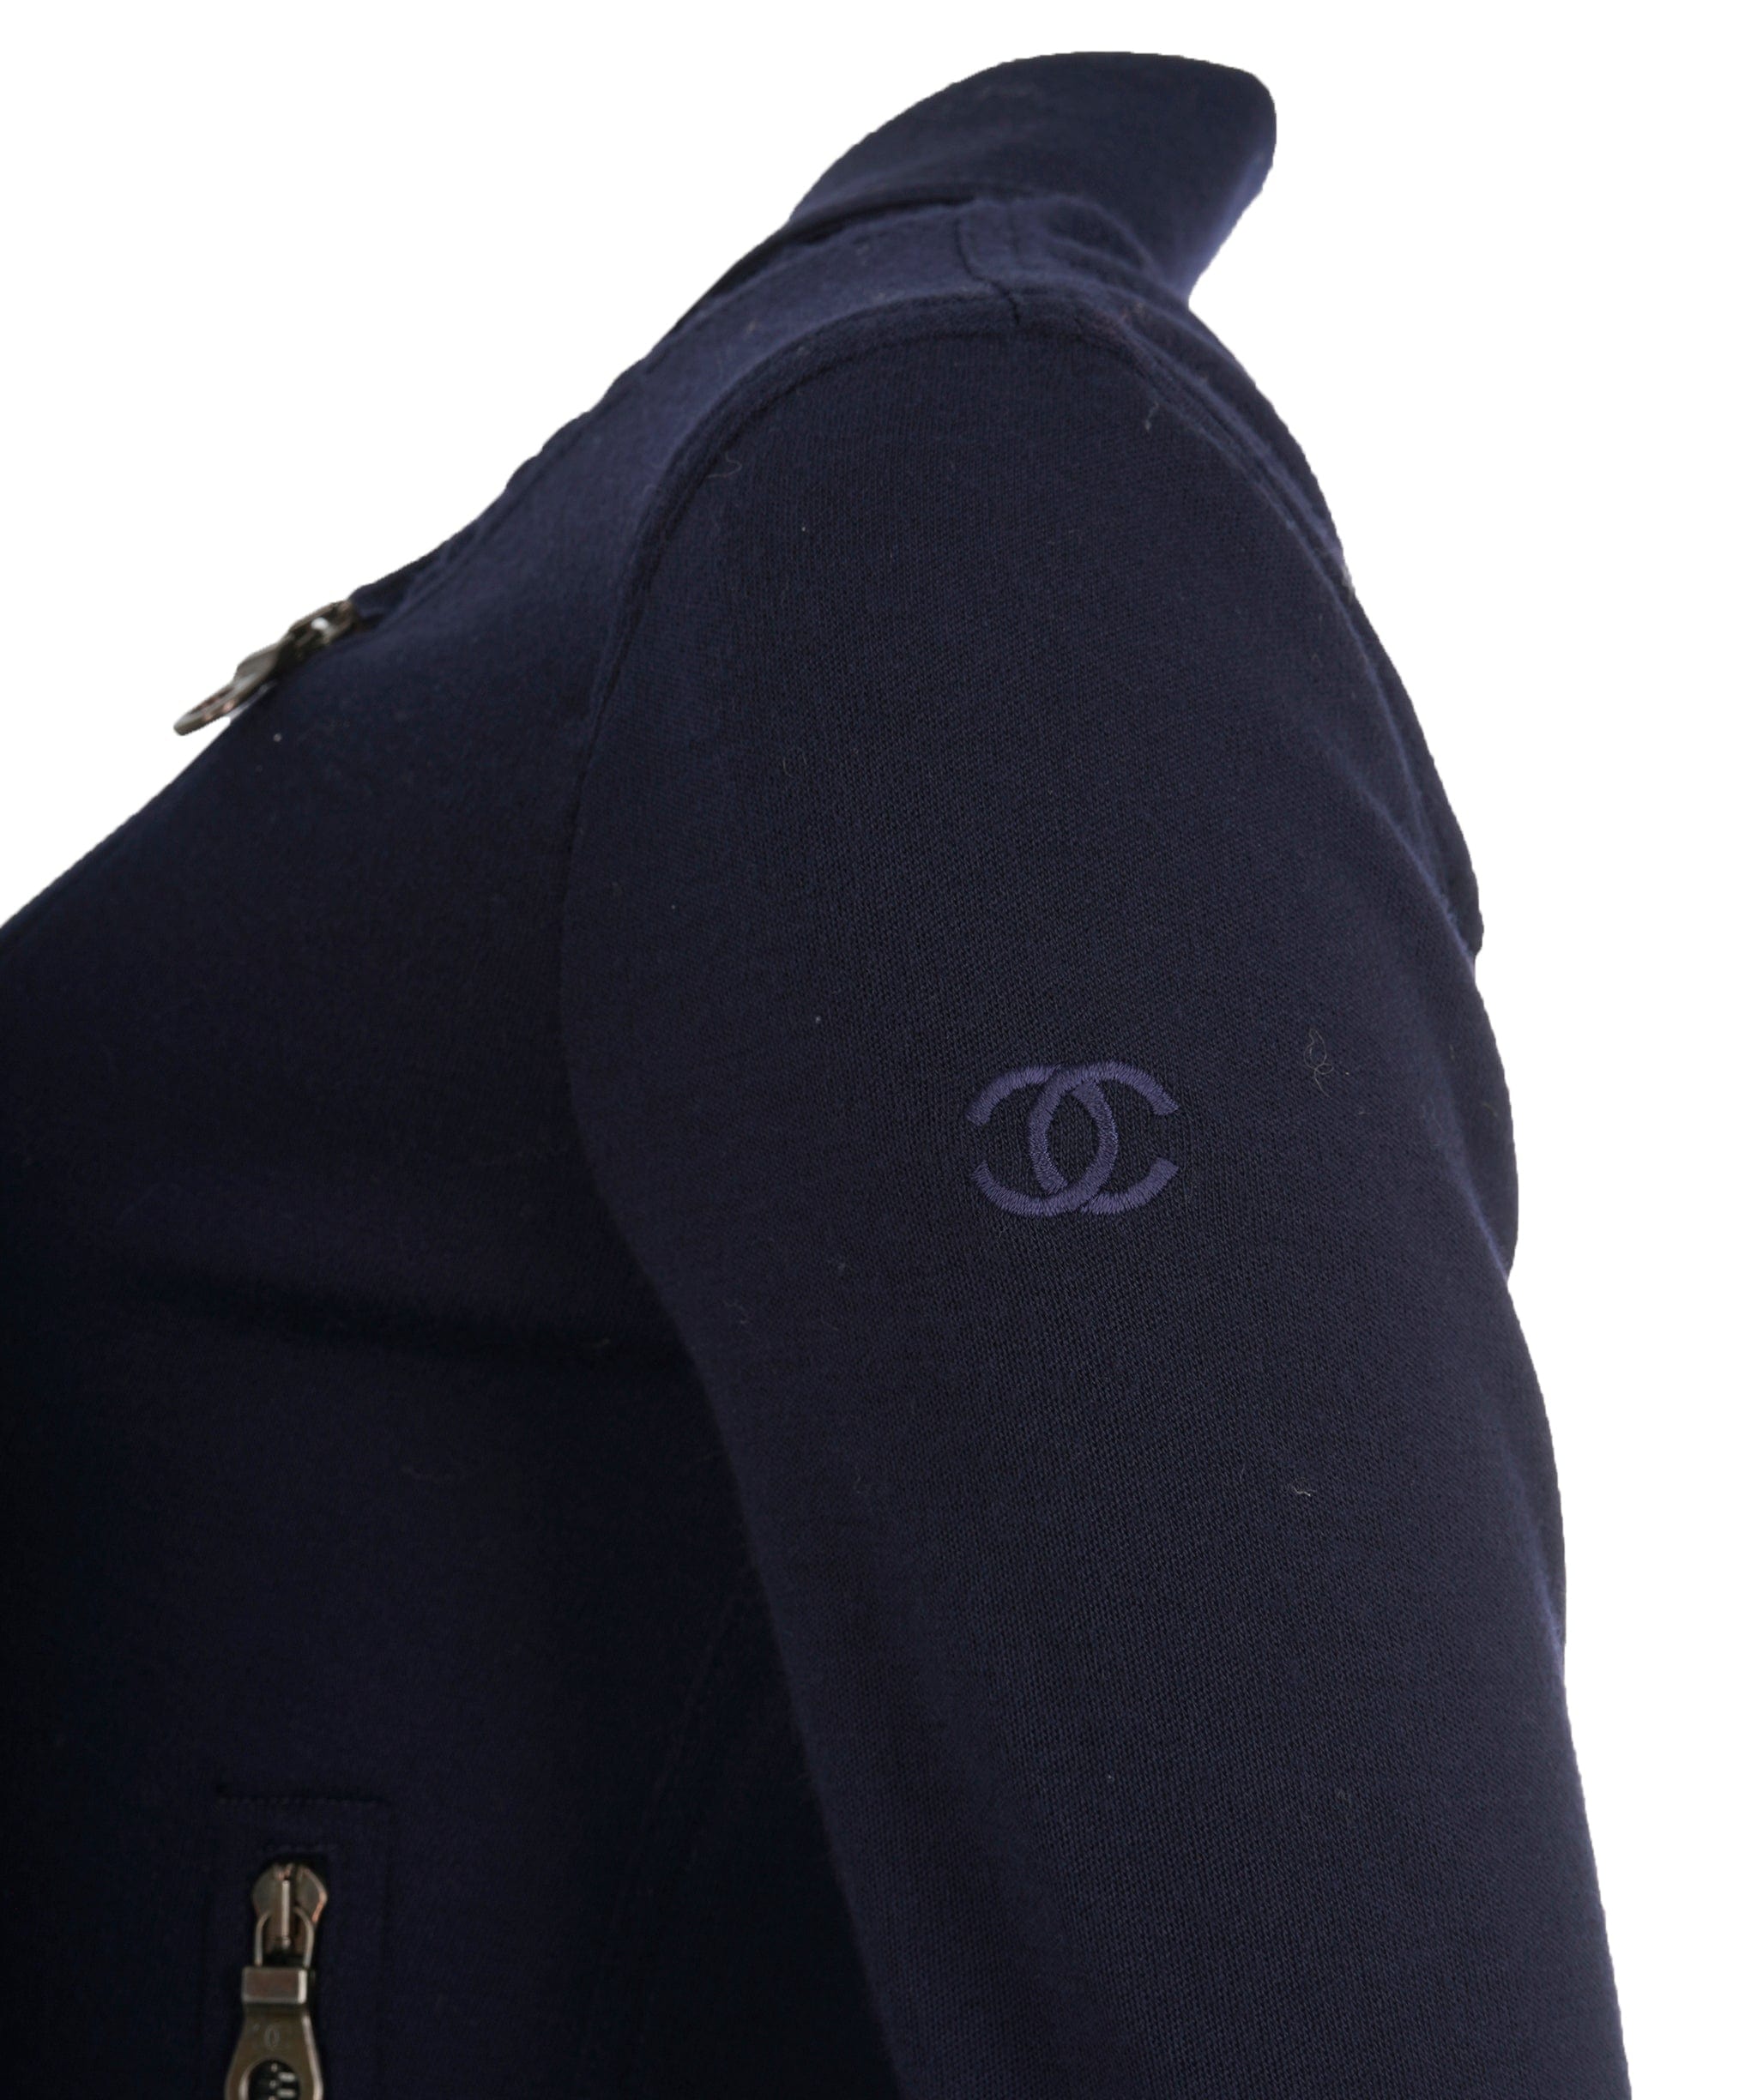 Chanel Chanel CC Biker Jacket  ALC1317